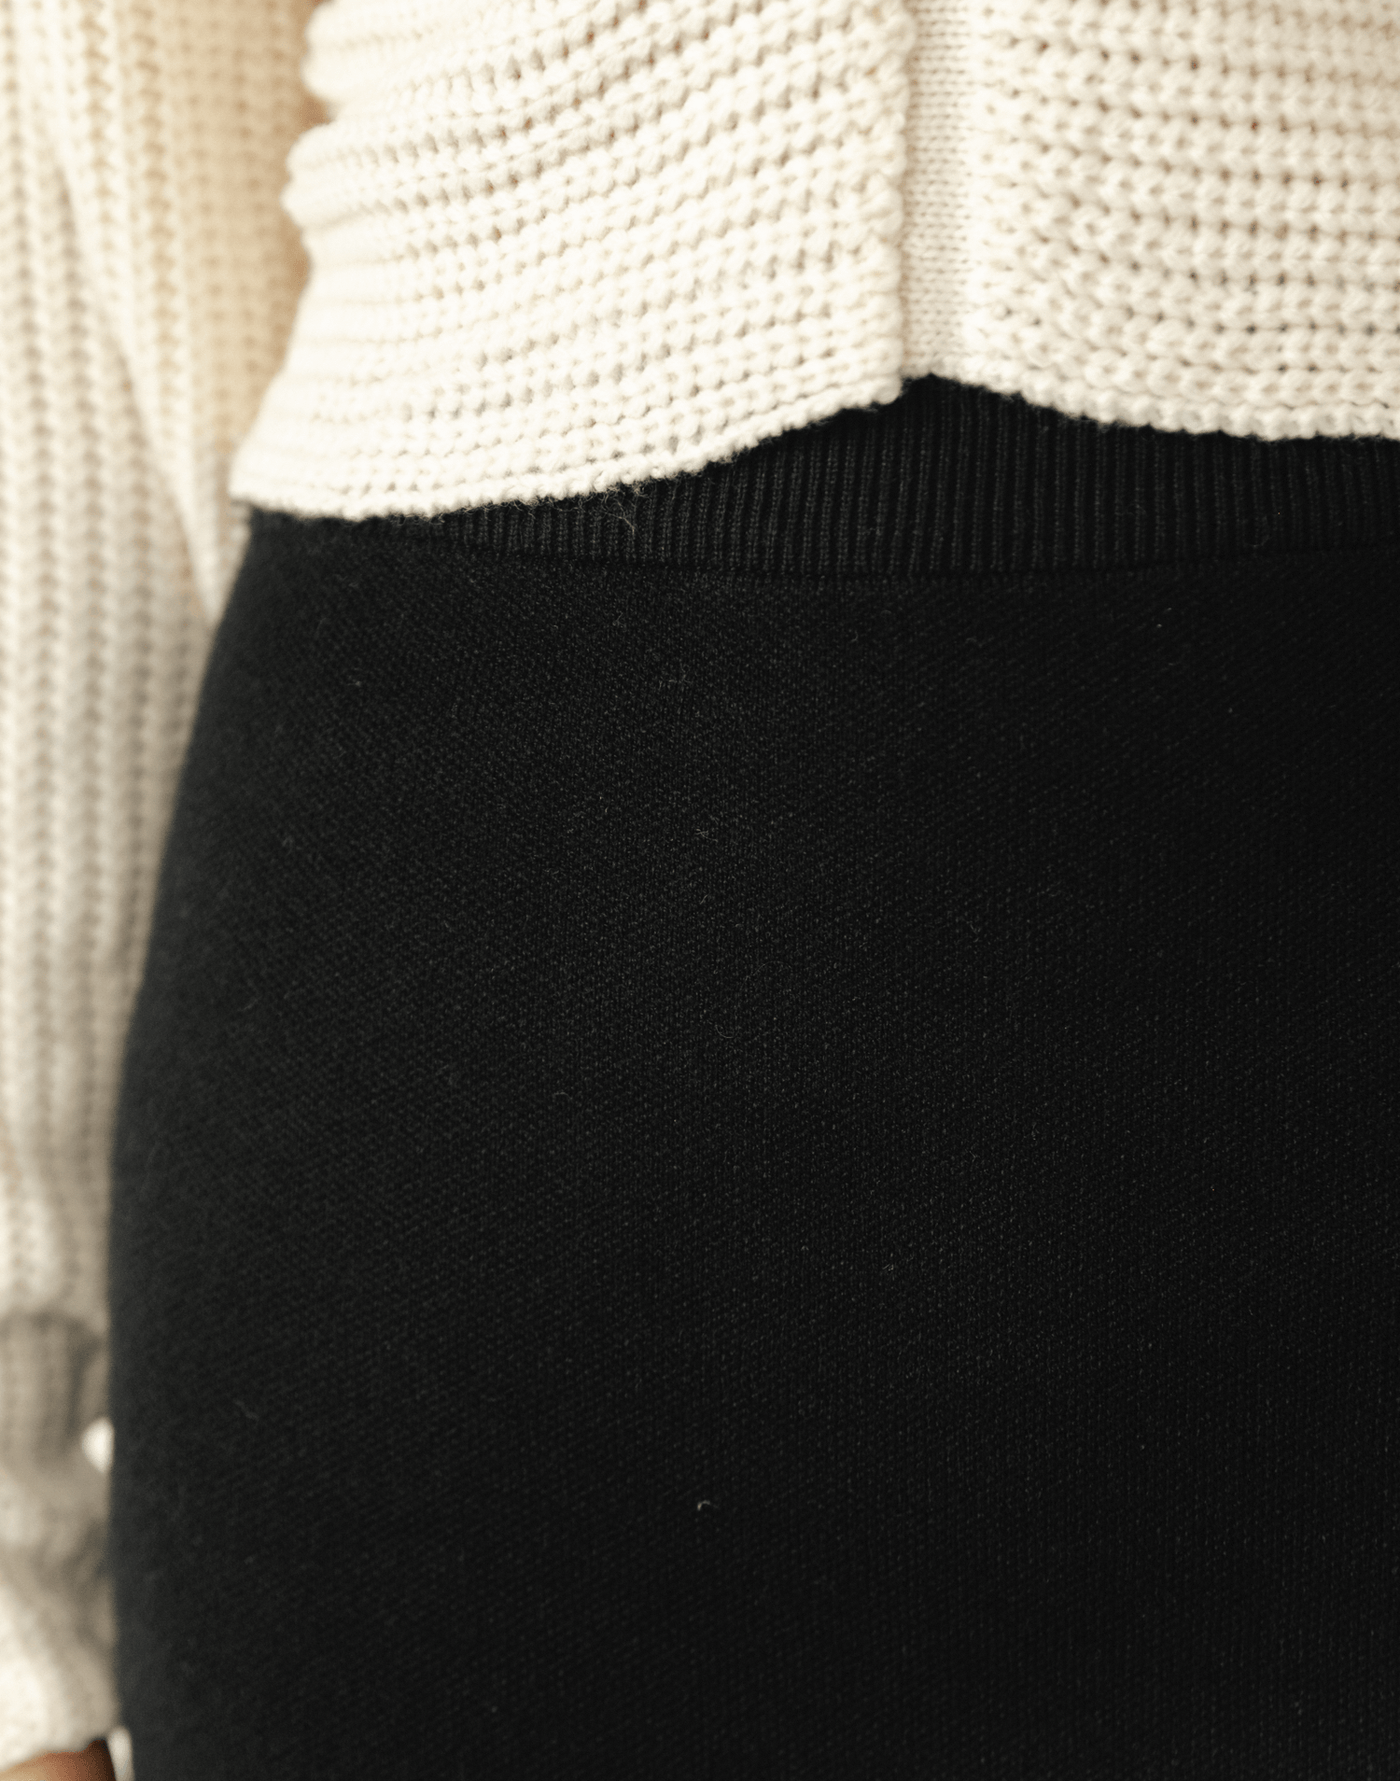 Escape to Rome Mini Skirt (Black) - Black High Waisted Mini Skirt - Women's Skirt - Charcoal Clothing